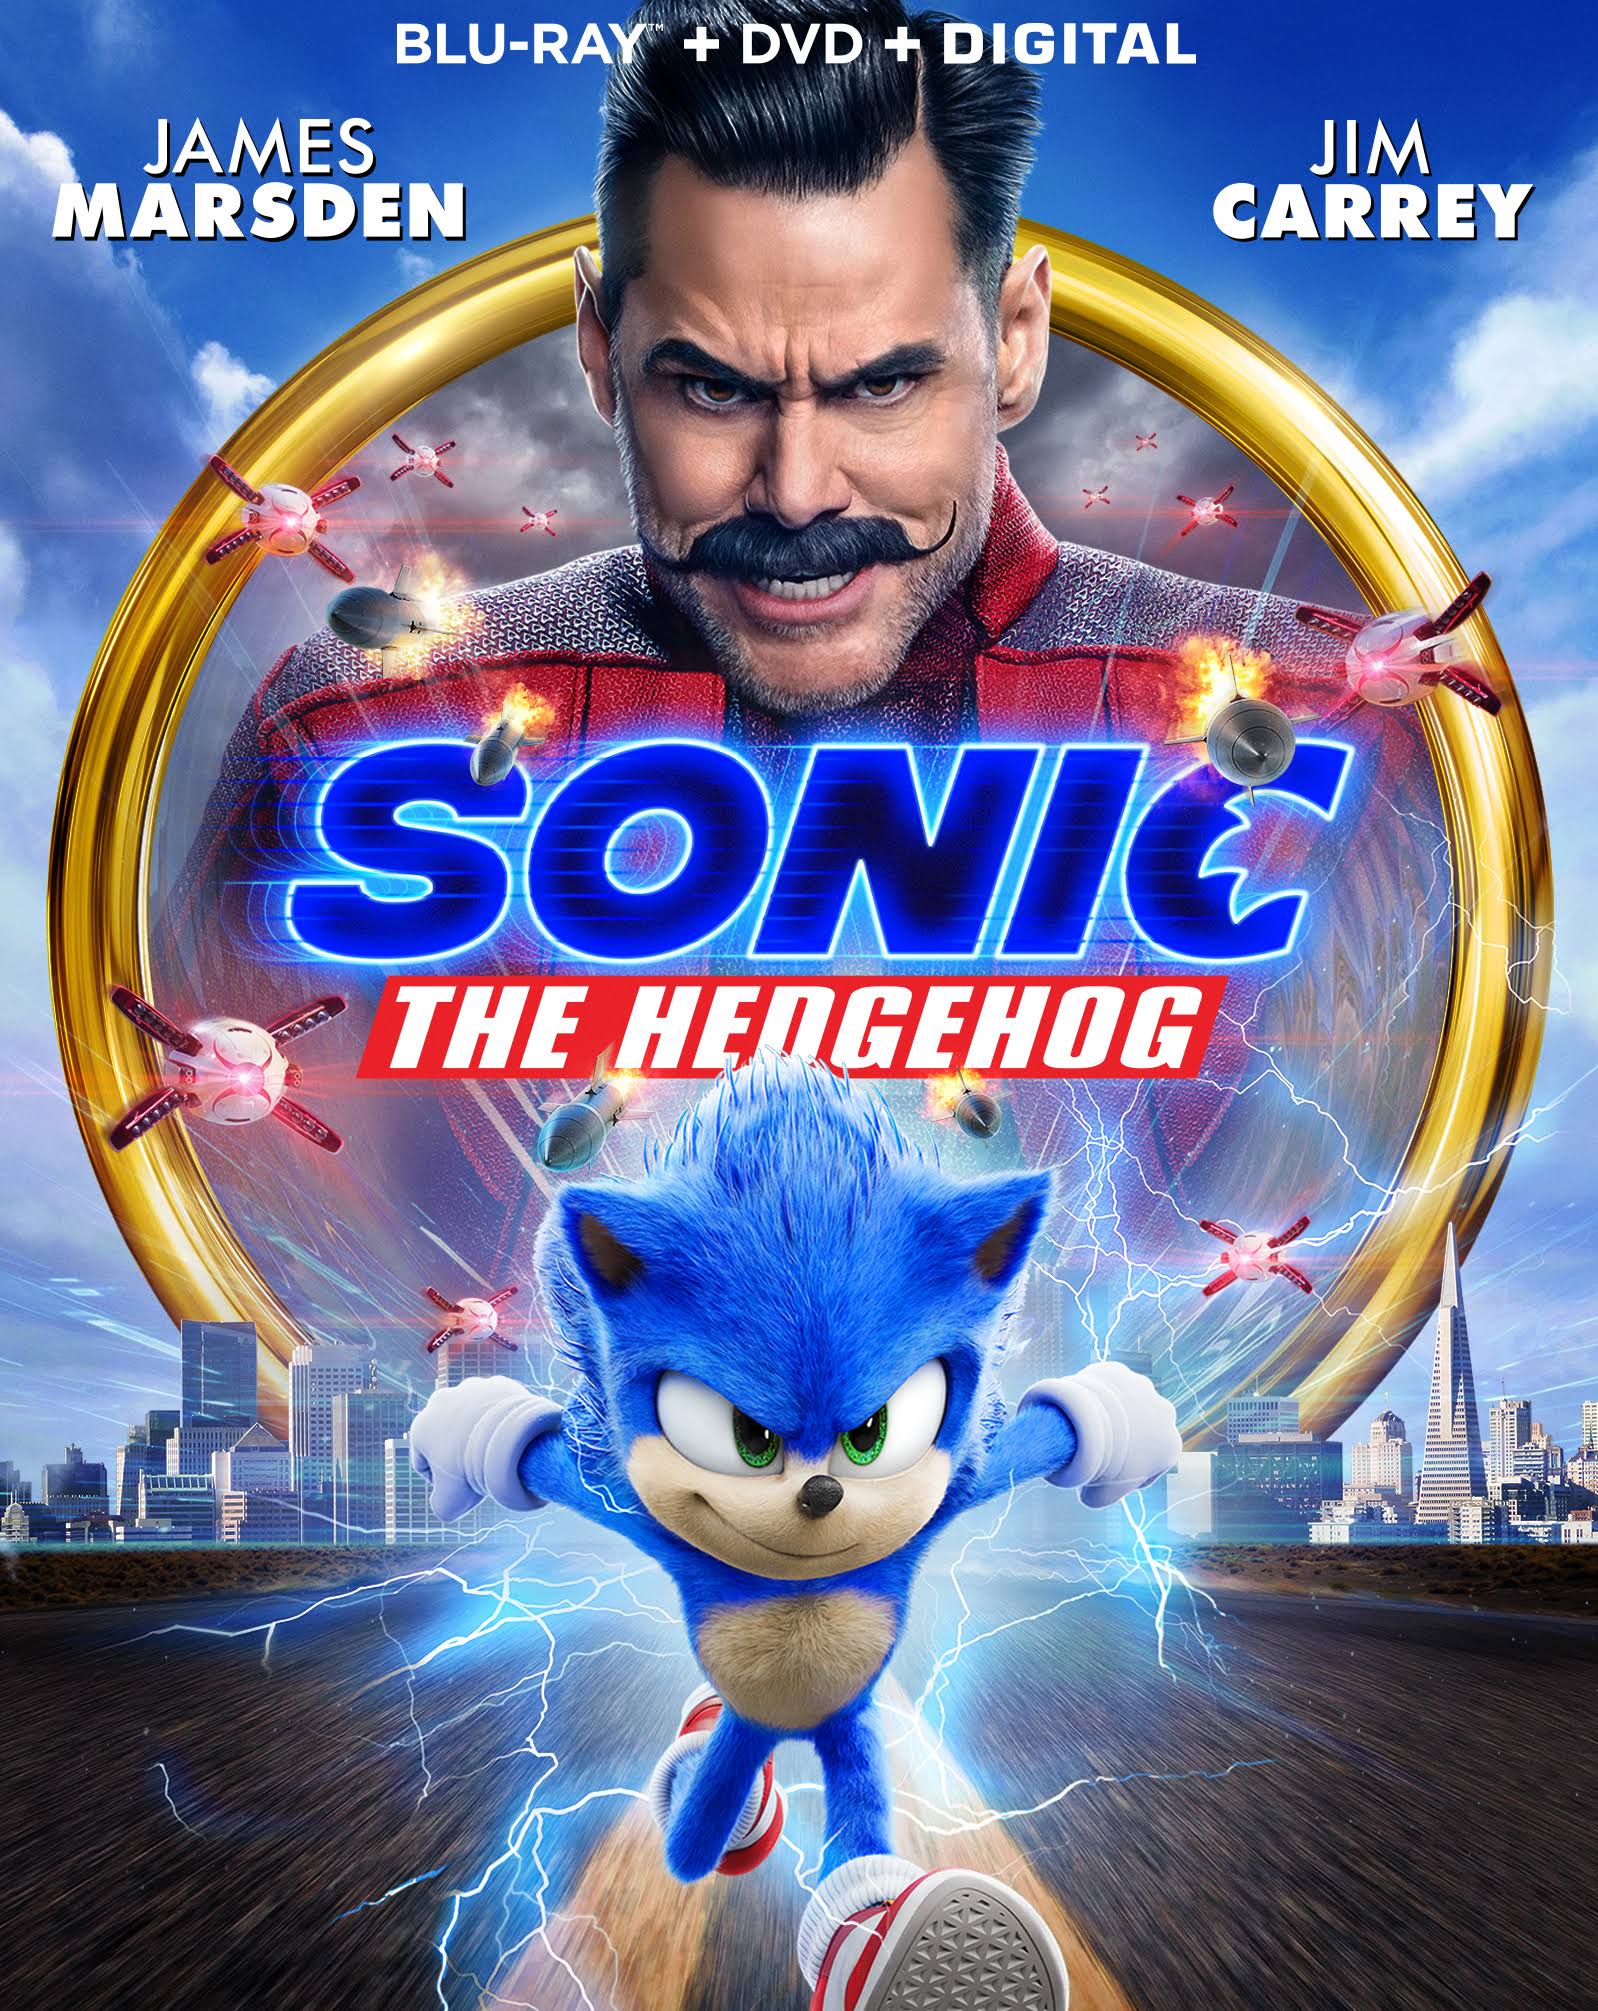 DVD Blu-ray Sonic The Hedgehog